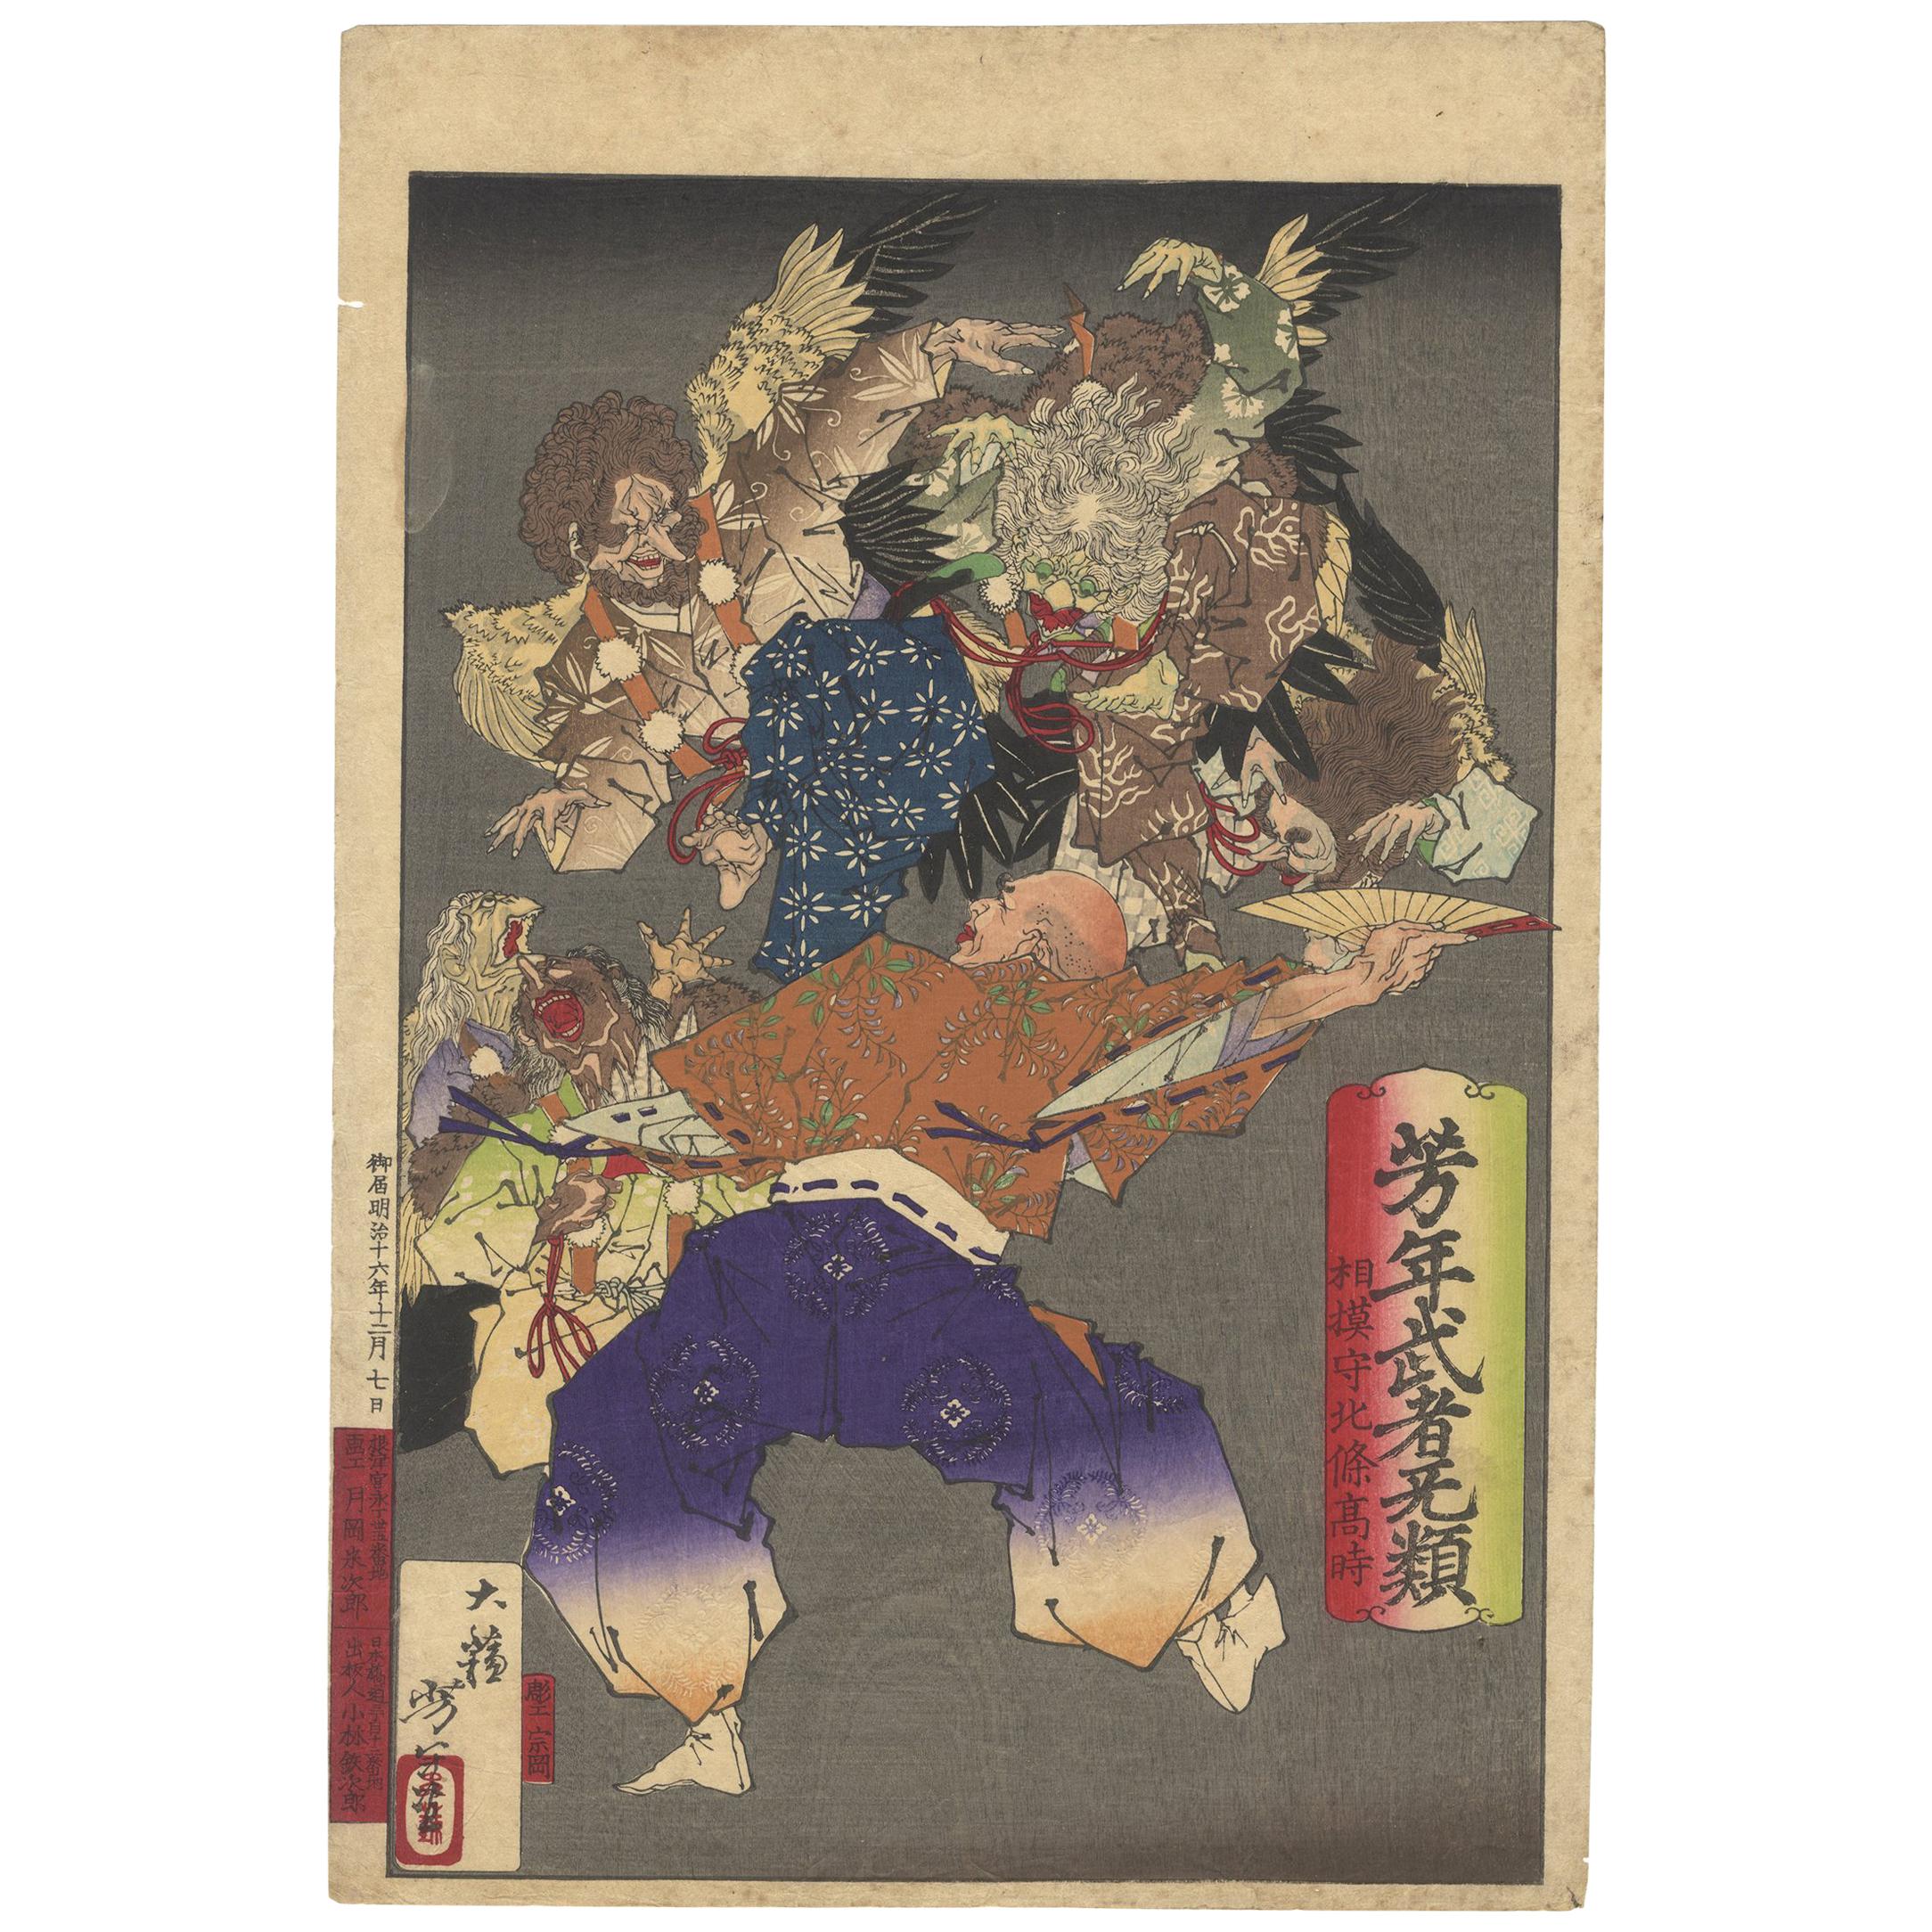 Yoshitoshi, Original Japanese Woodblock Print, Ghost, Ukiyo-e, Art, 19th Century